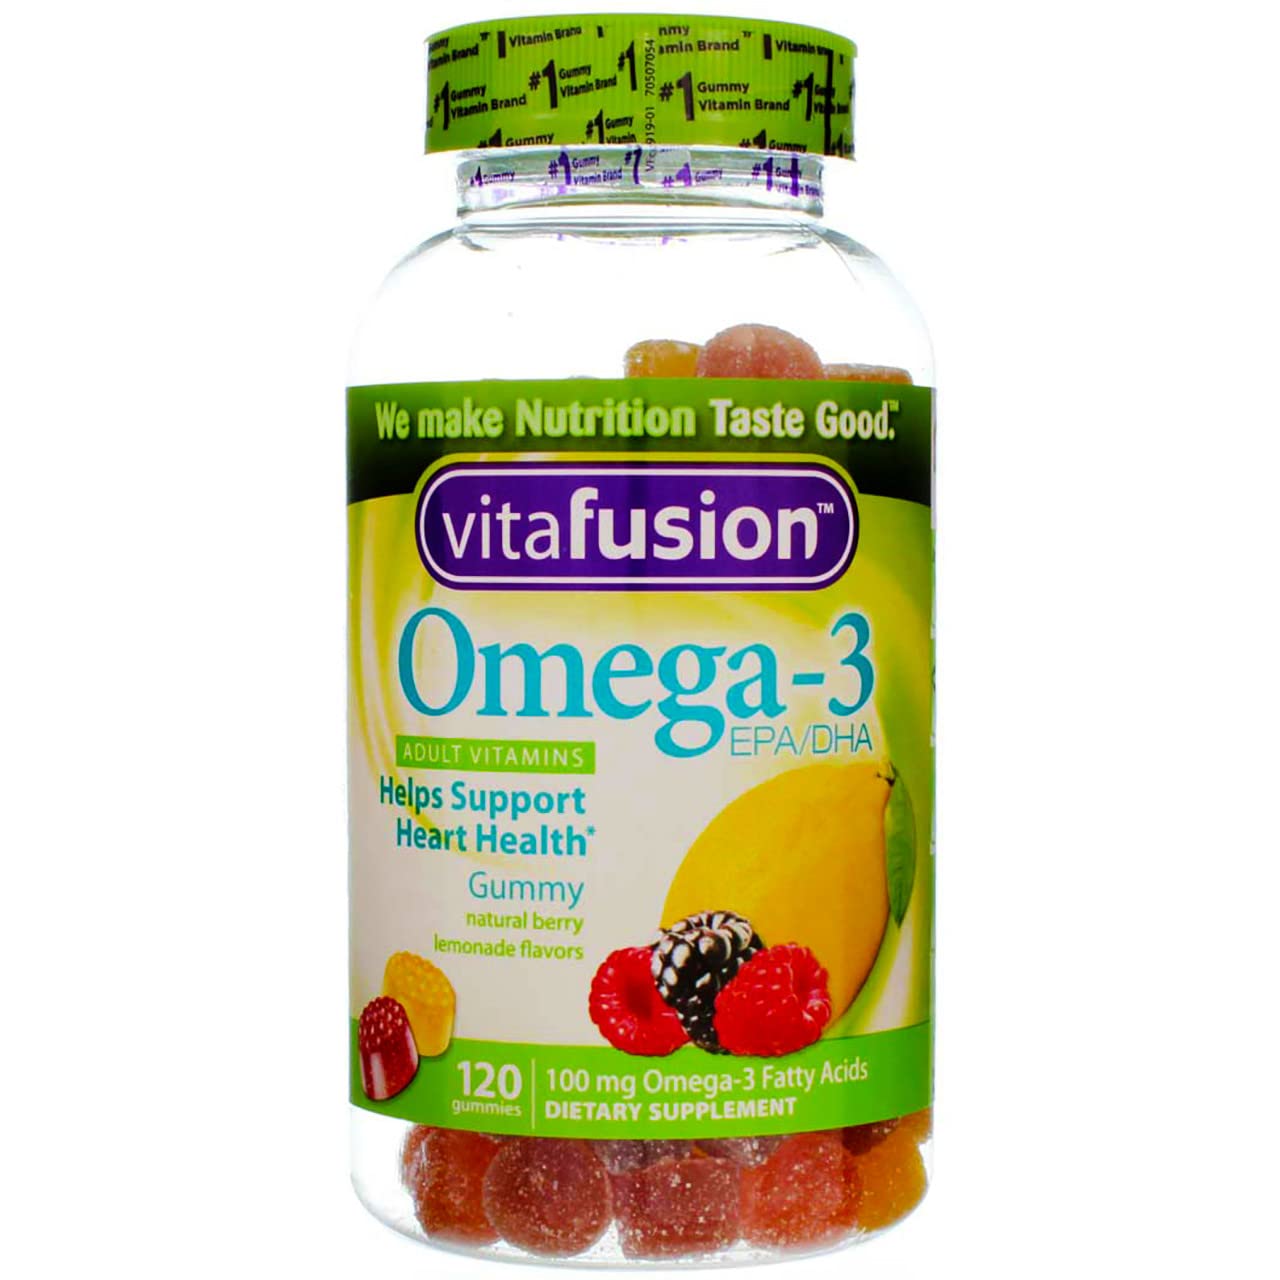 Vitafusion Omega 3 EPA/DHA Gummy Vitamins for Adults Dietary Supplement Lemon, Berry & Cherry avors 120 Each (Pack of 9)